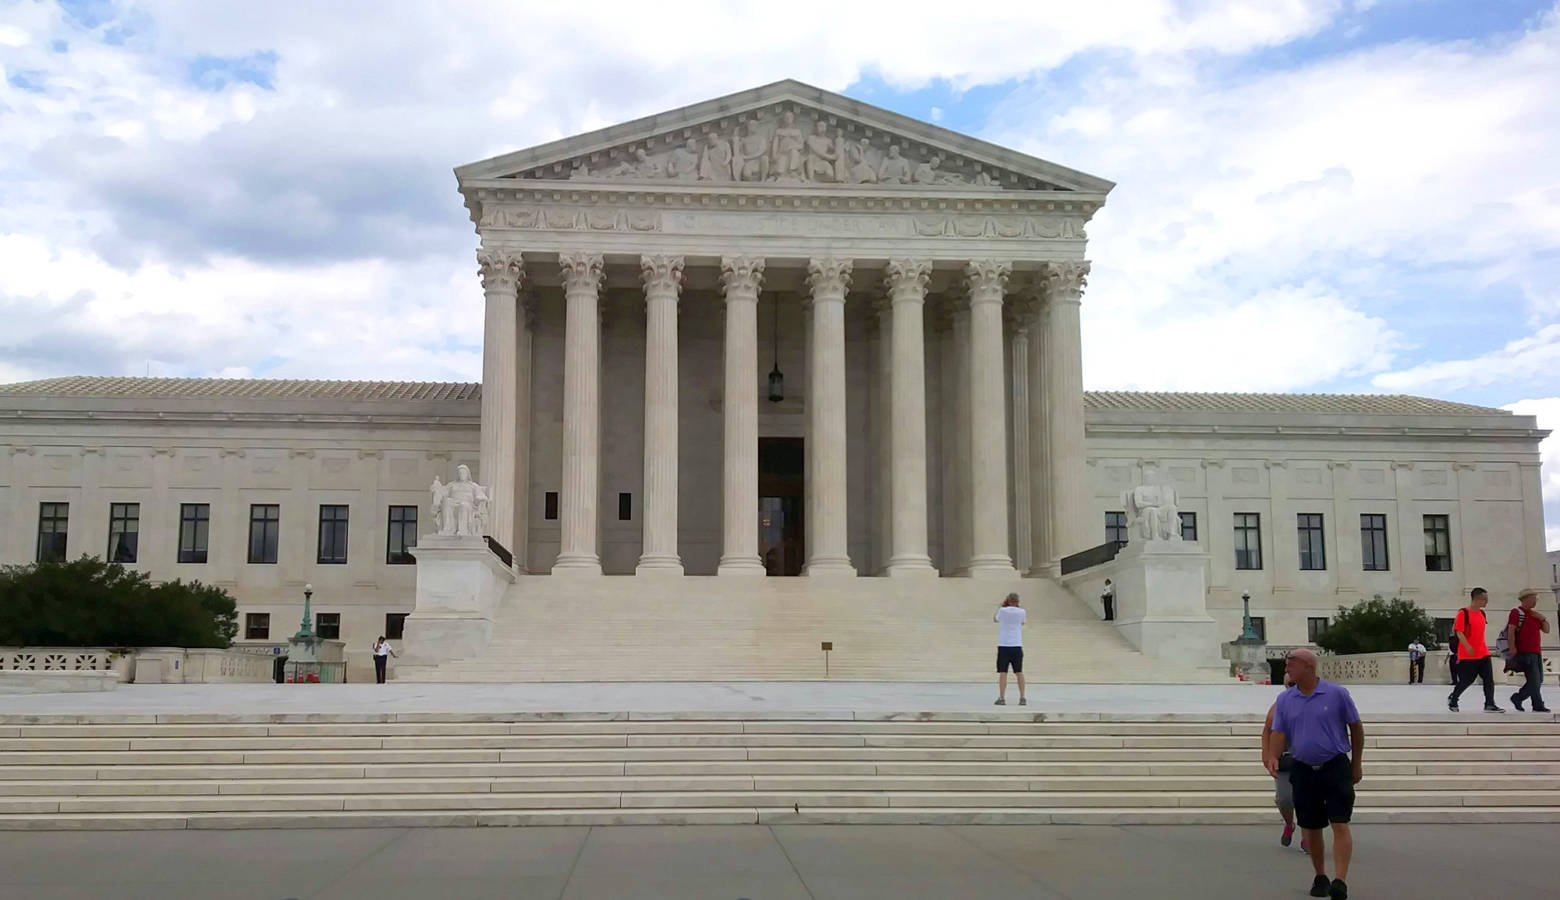 The United States Supreme Court. (Lauren Chapman/IPB News)